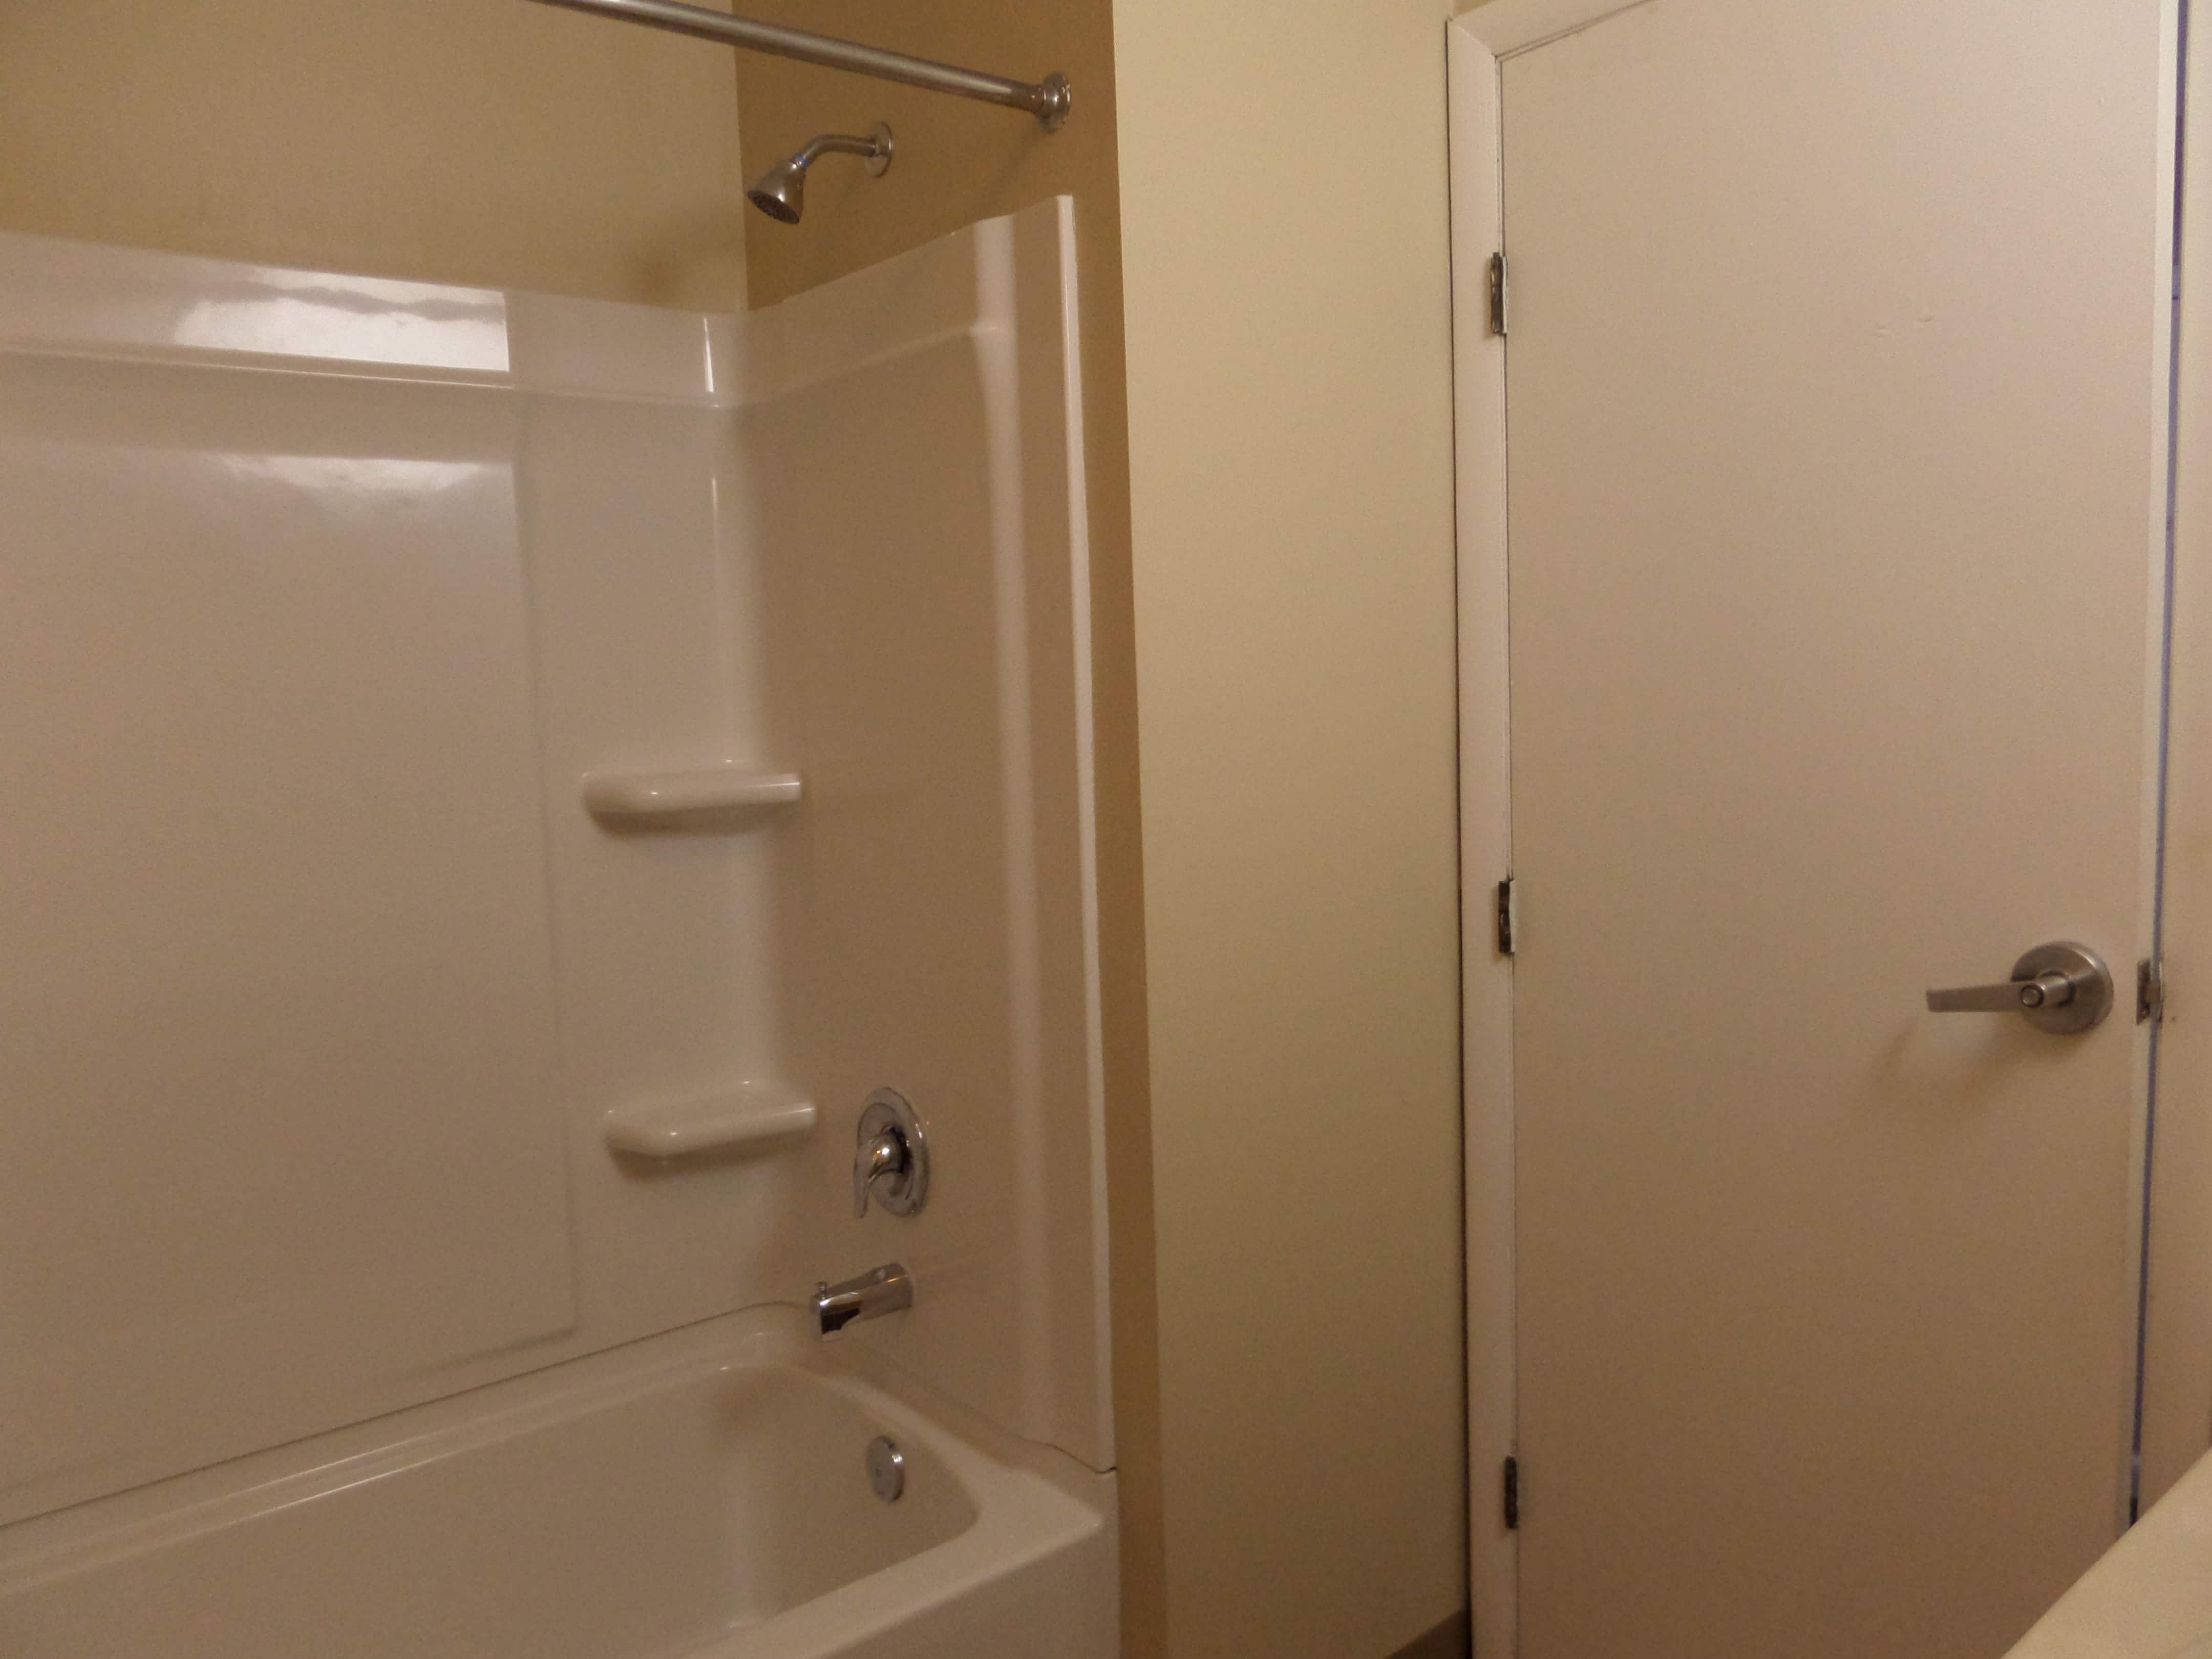 Shared bathroom with standard shower rail 